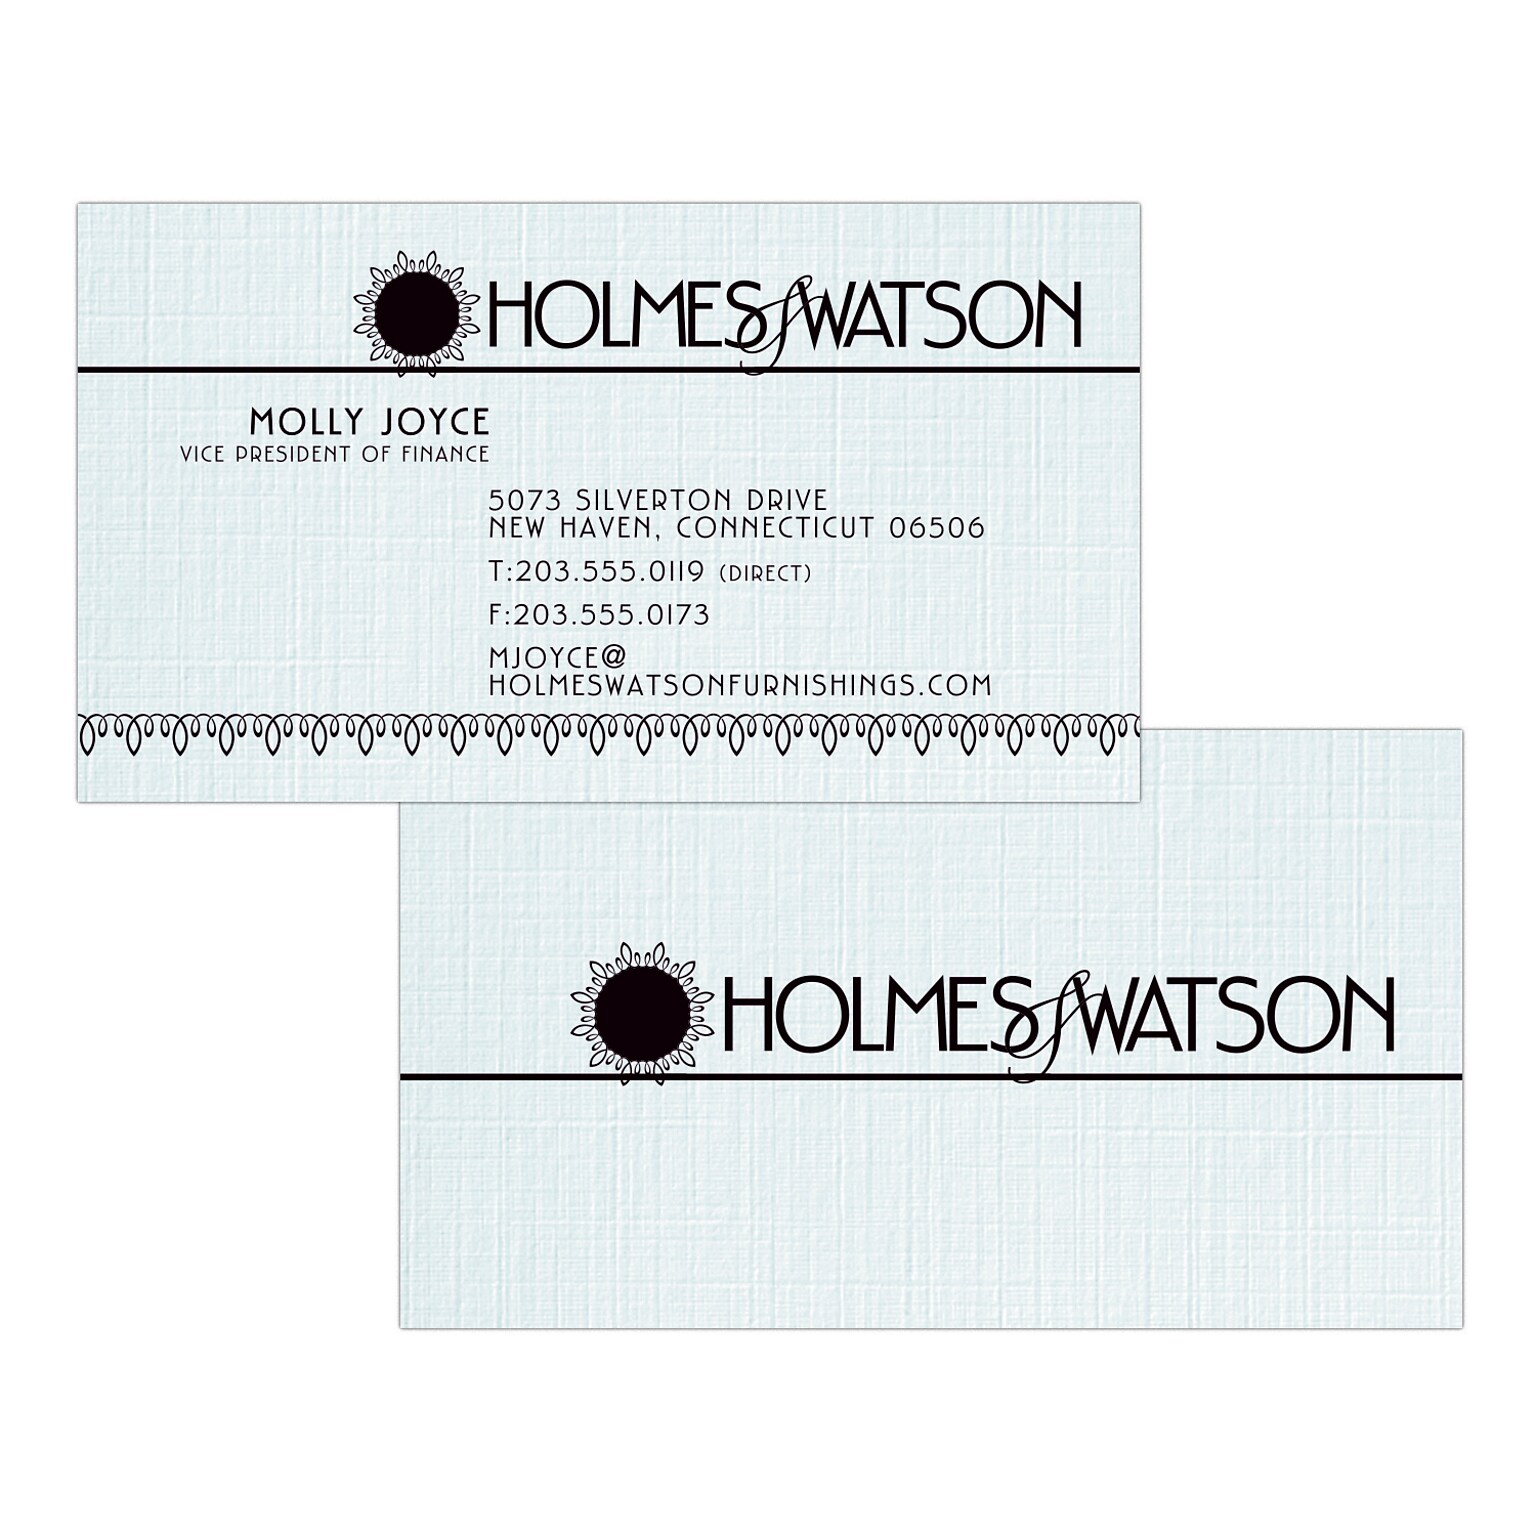 Custom 1-2 Color Business Cards, CLASSIC® Linen Haviland Blue 80#, Flat Print, 1 Standard Ink, 2-Sided, 250/PK